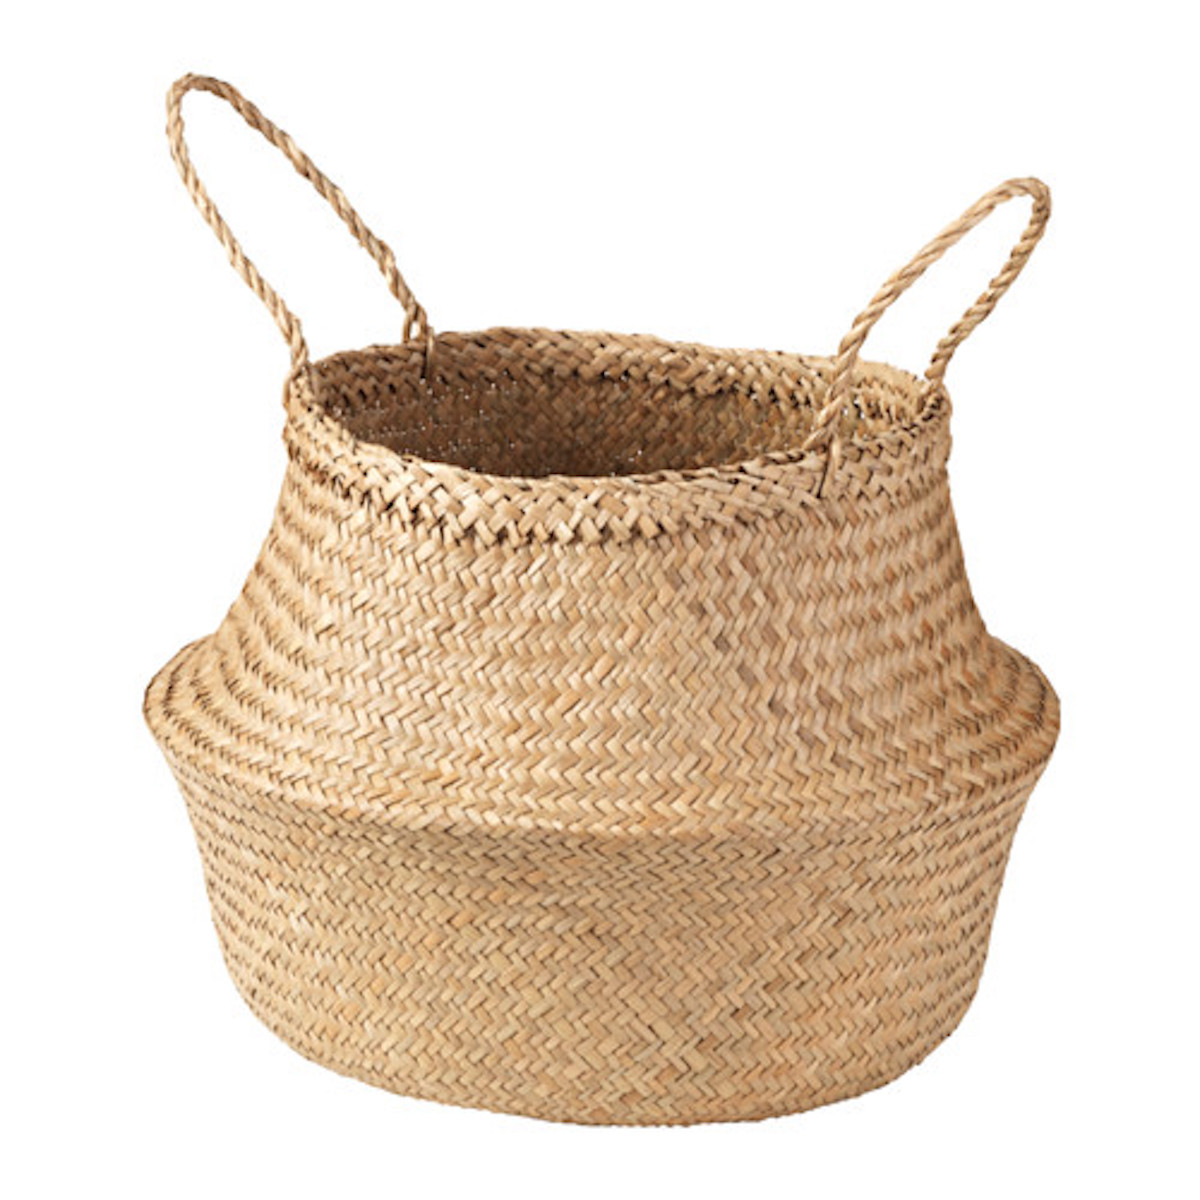 Fladis seagrass basket 